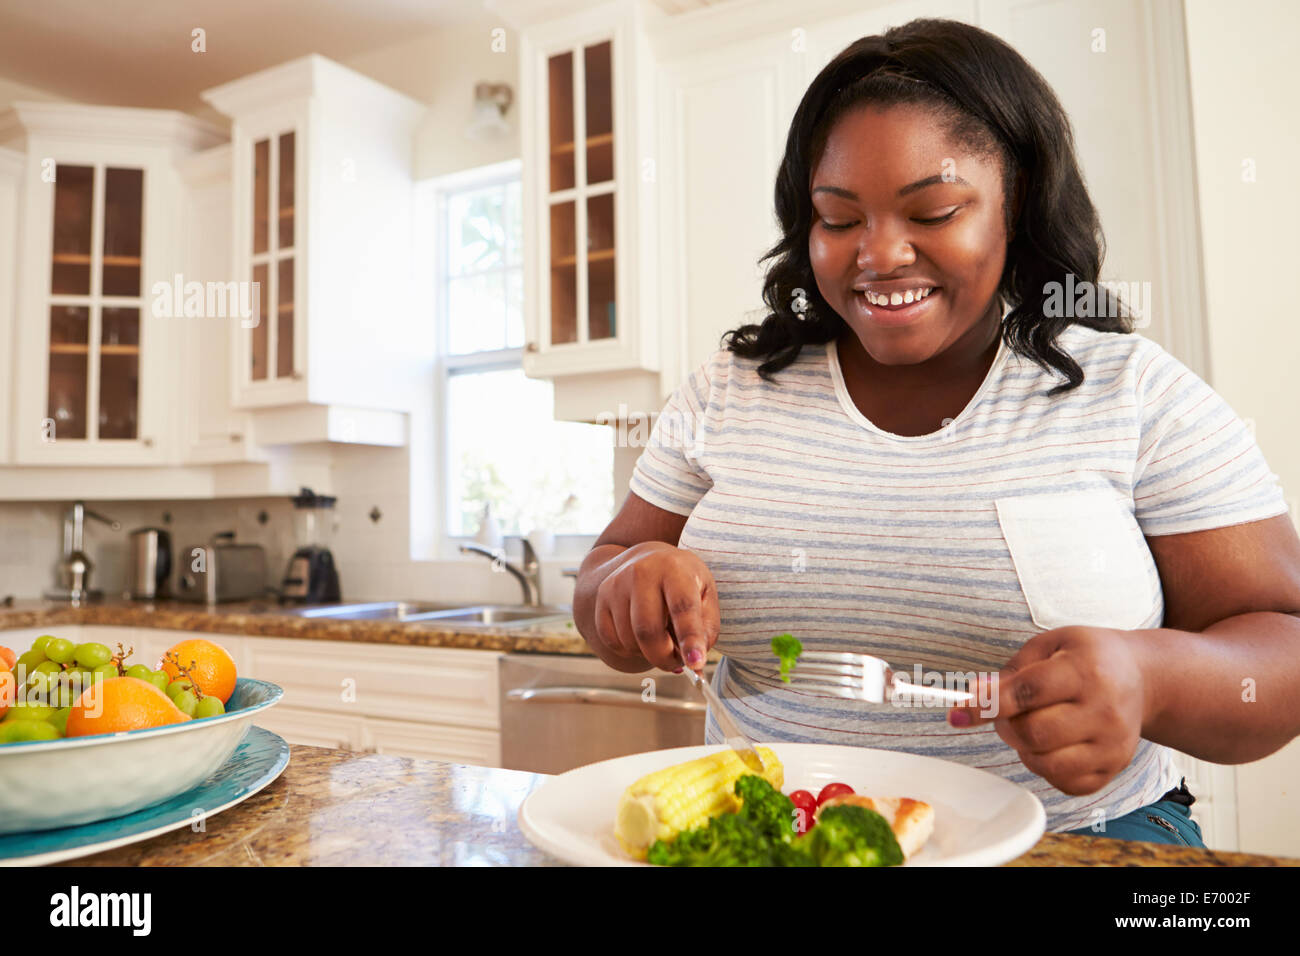 Donna sovrappeso mangiare sano pasto in cucina Foto Stock